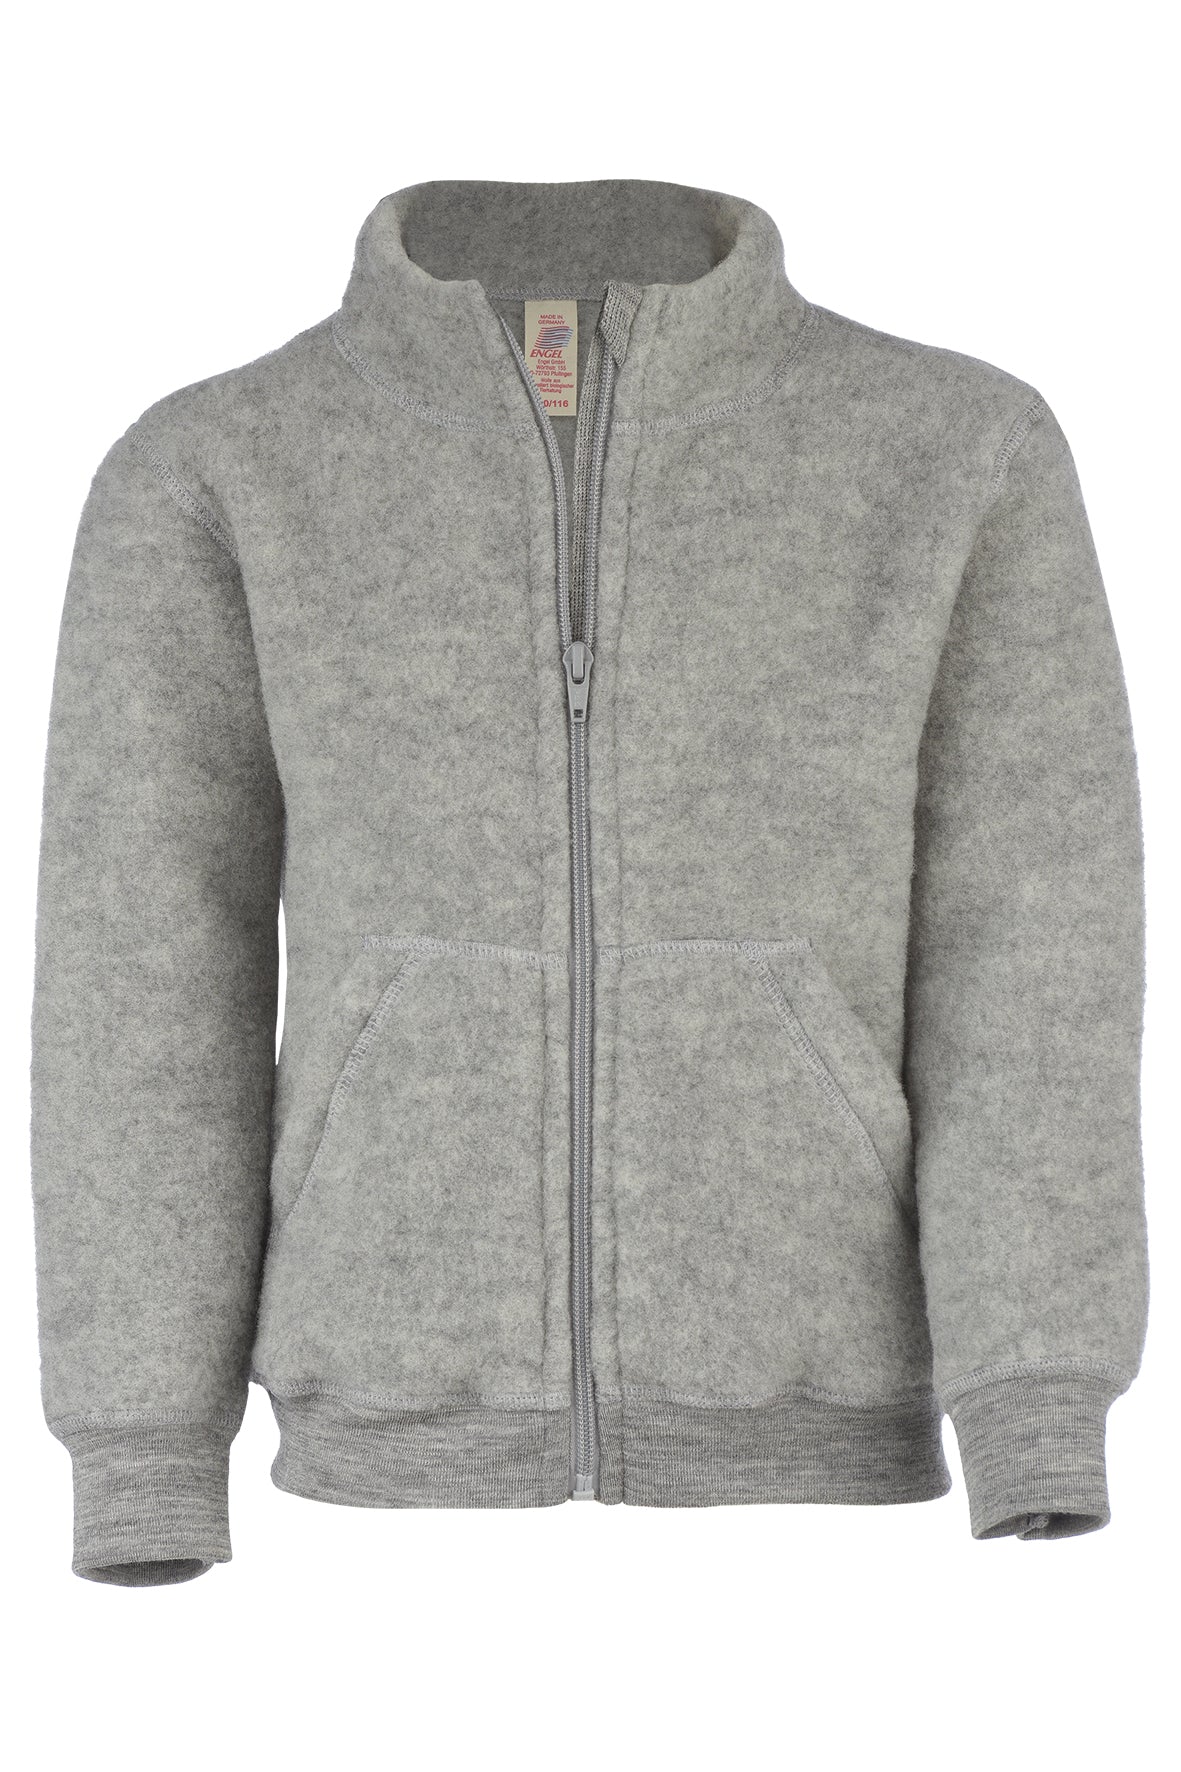 Engel Child Jacket Zipper, Weather Warmth with Fleece – and